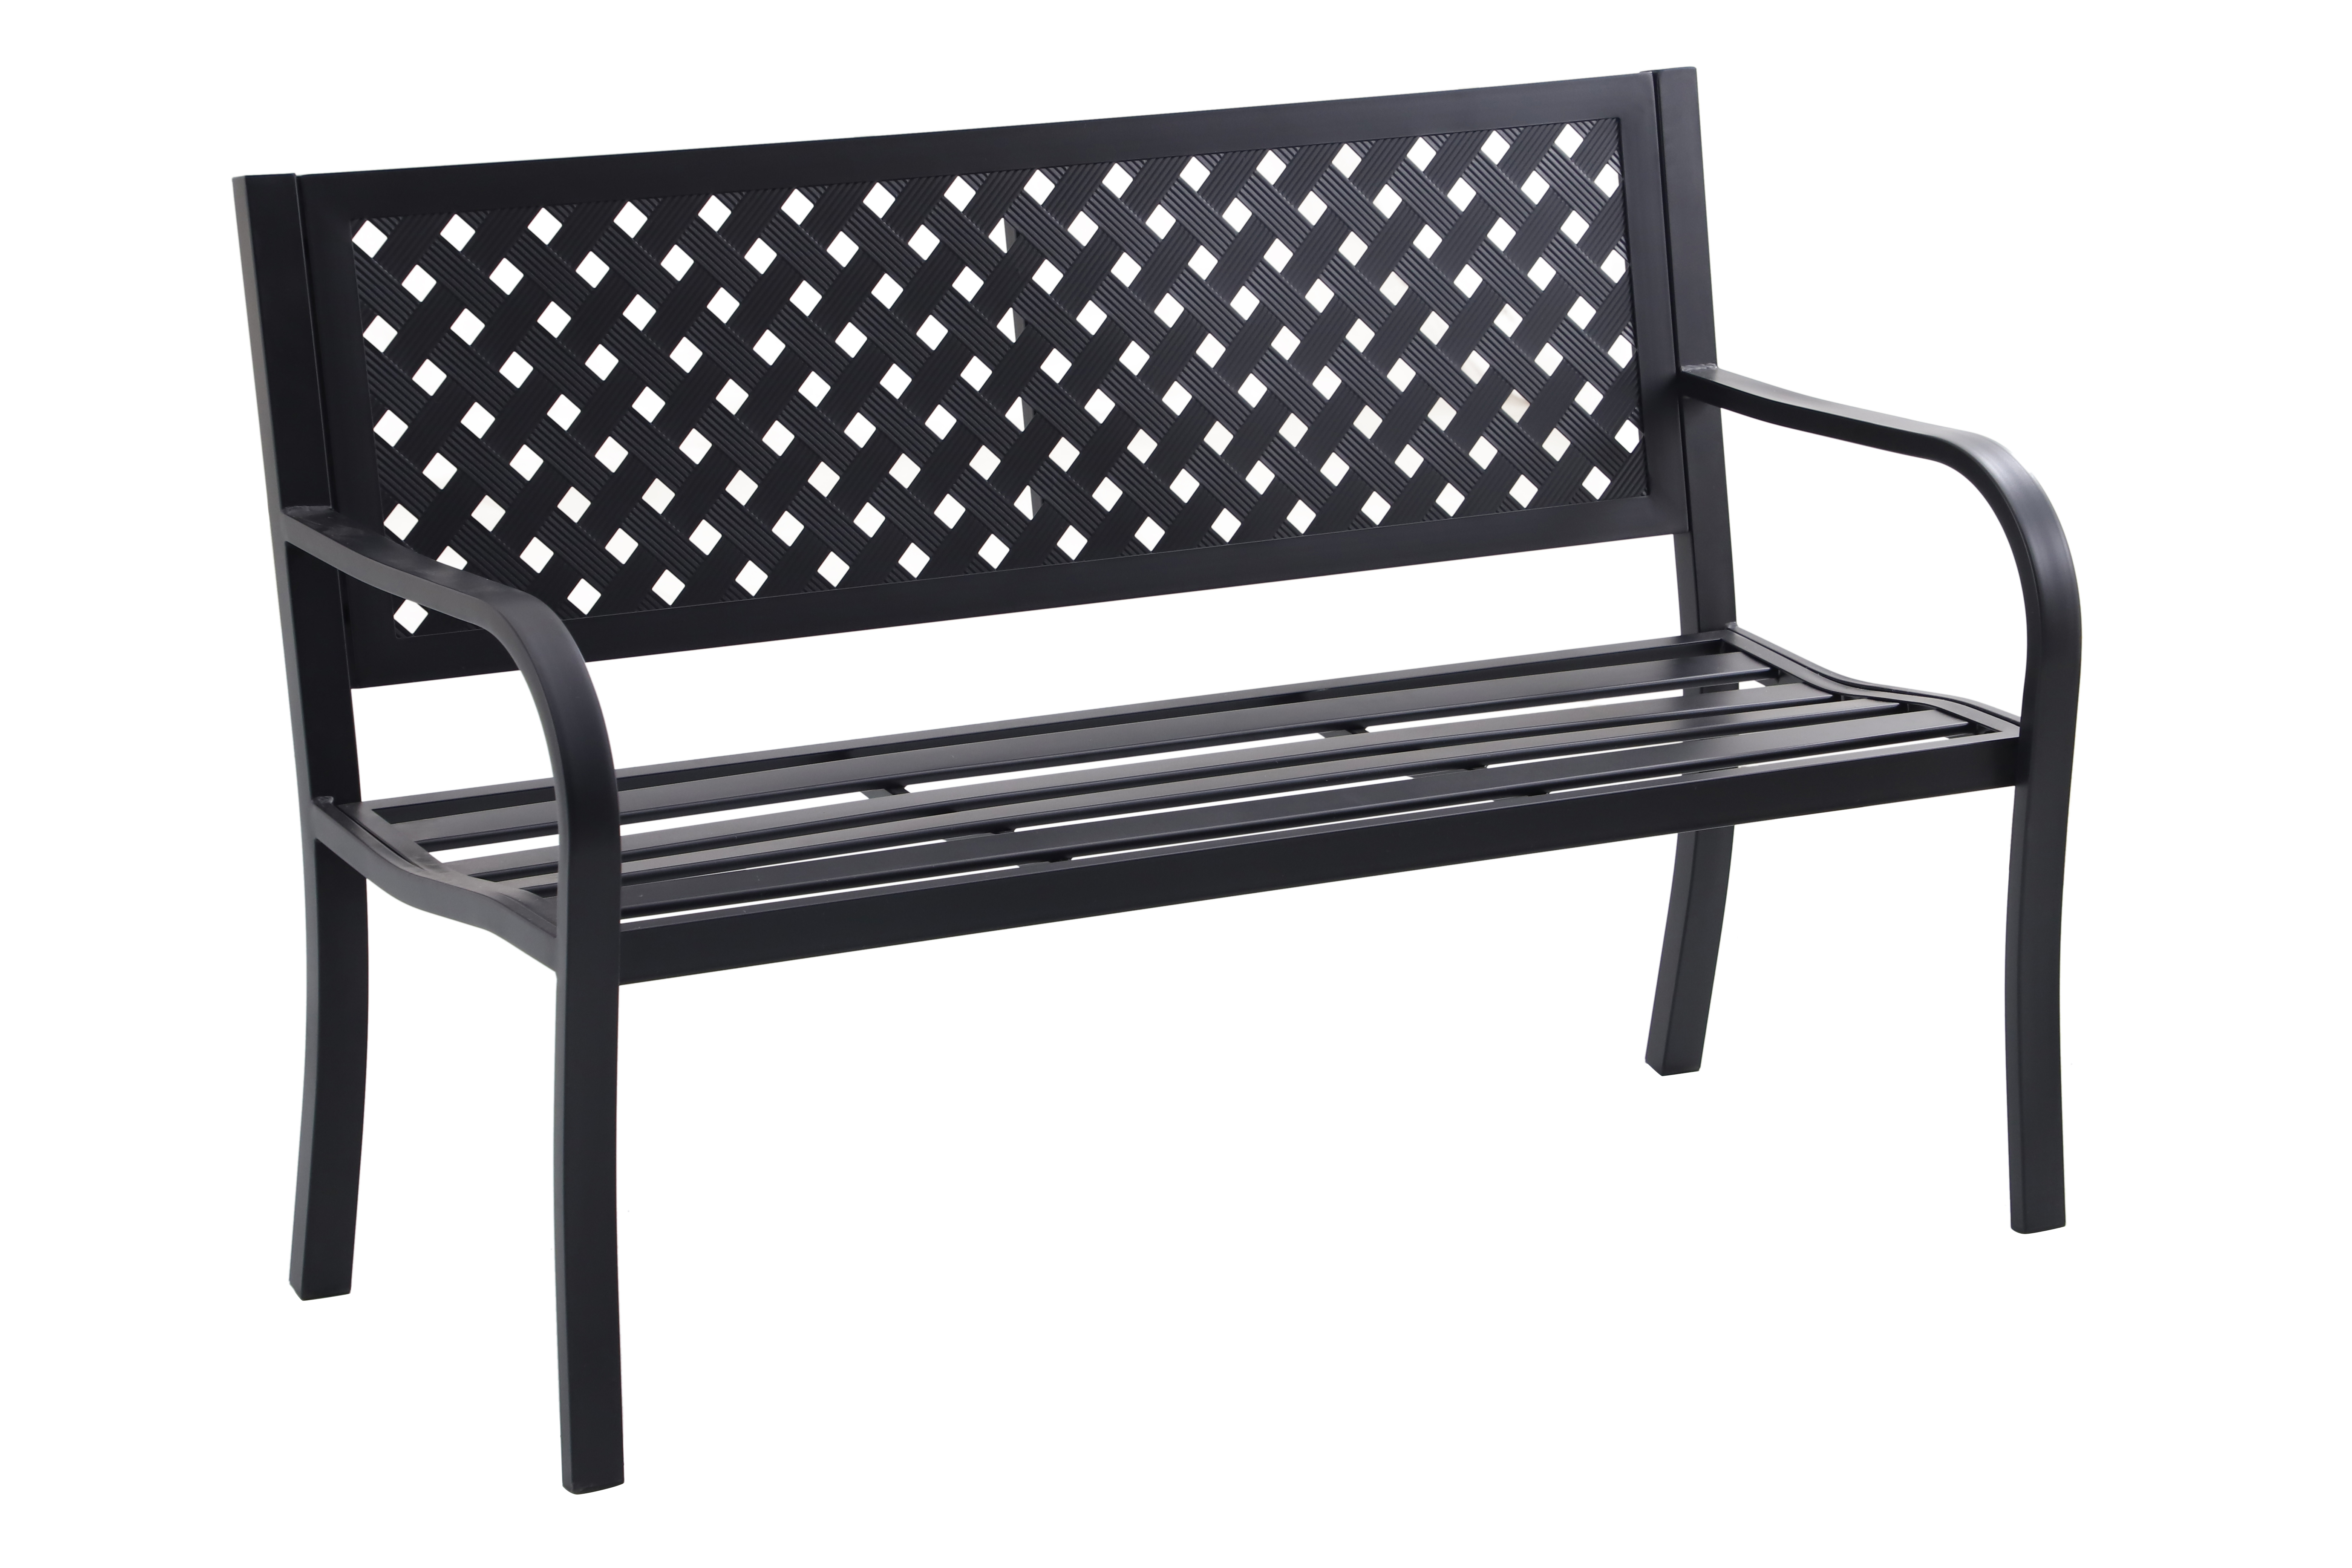 Mainstays Lattice High Back Slat Seat Steel Garden Bench, Black - image 4 of 12